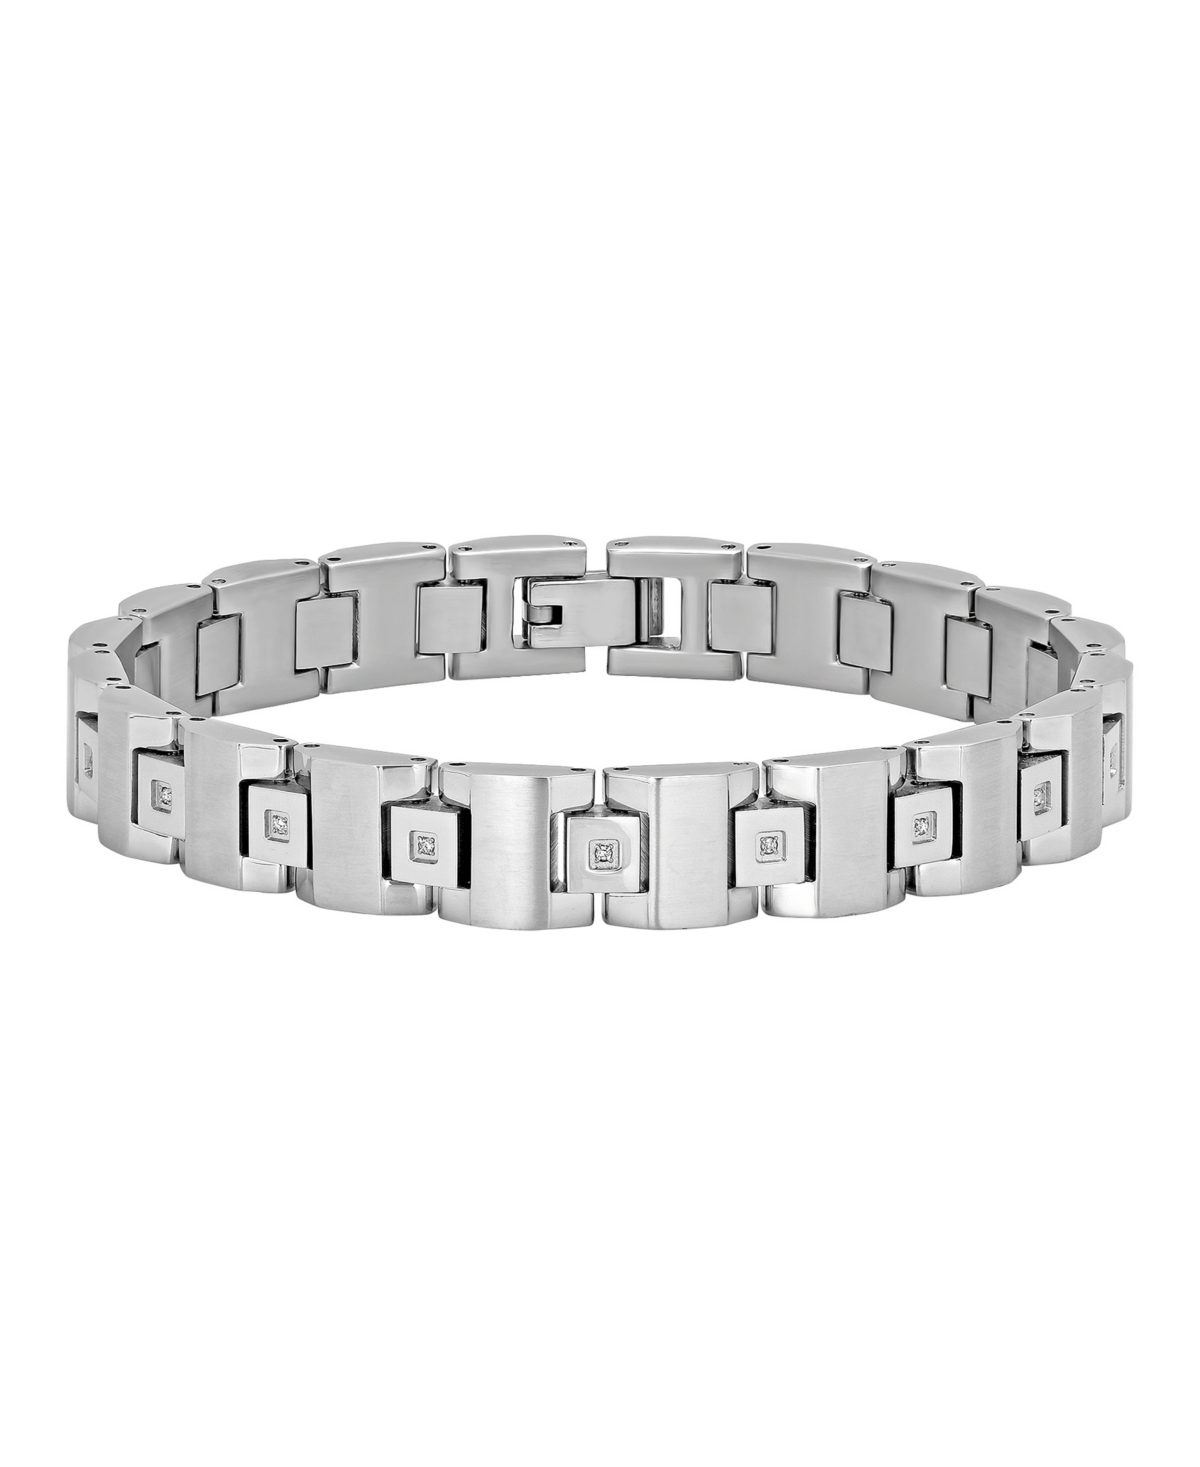 C & c Jewelry Macy's Men's Square Link Bracelet